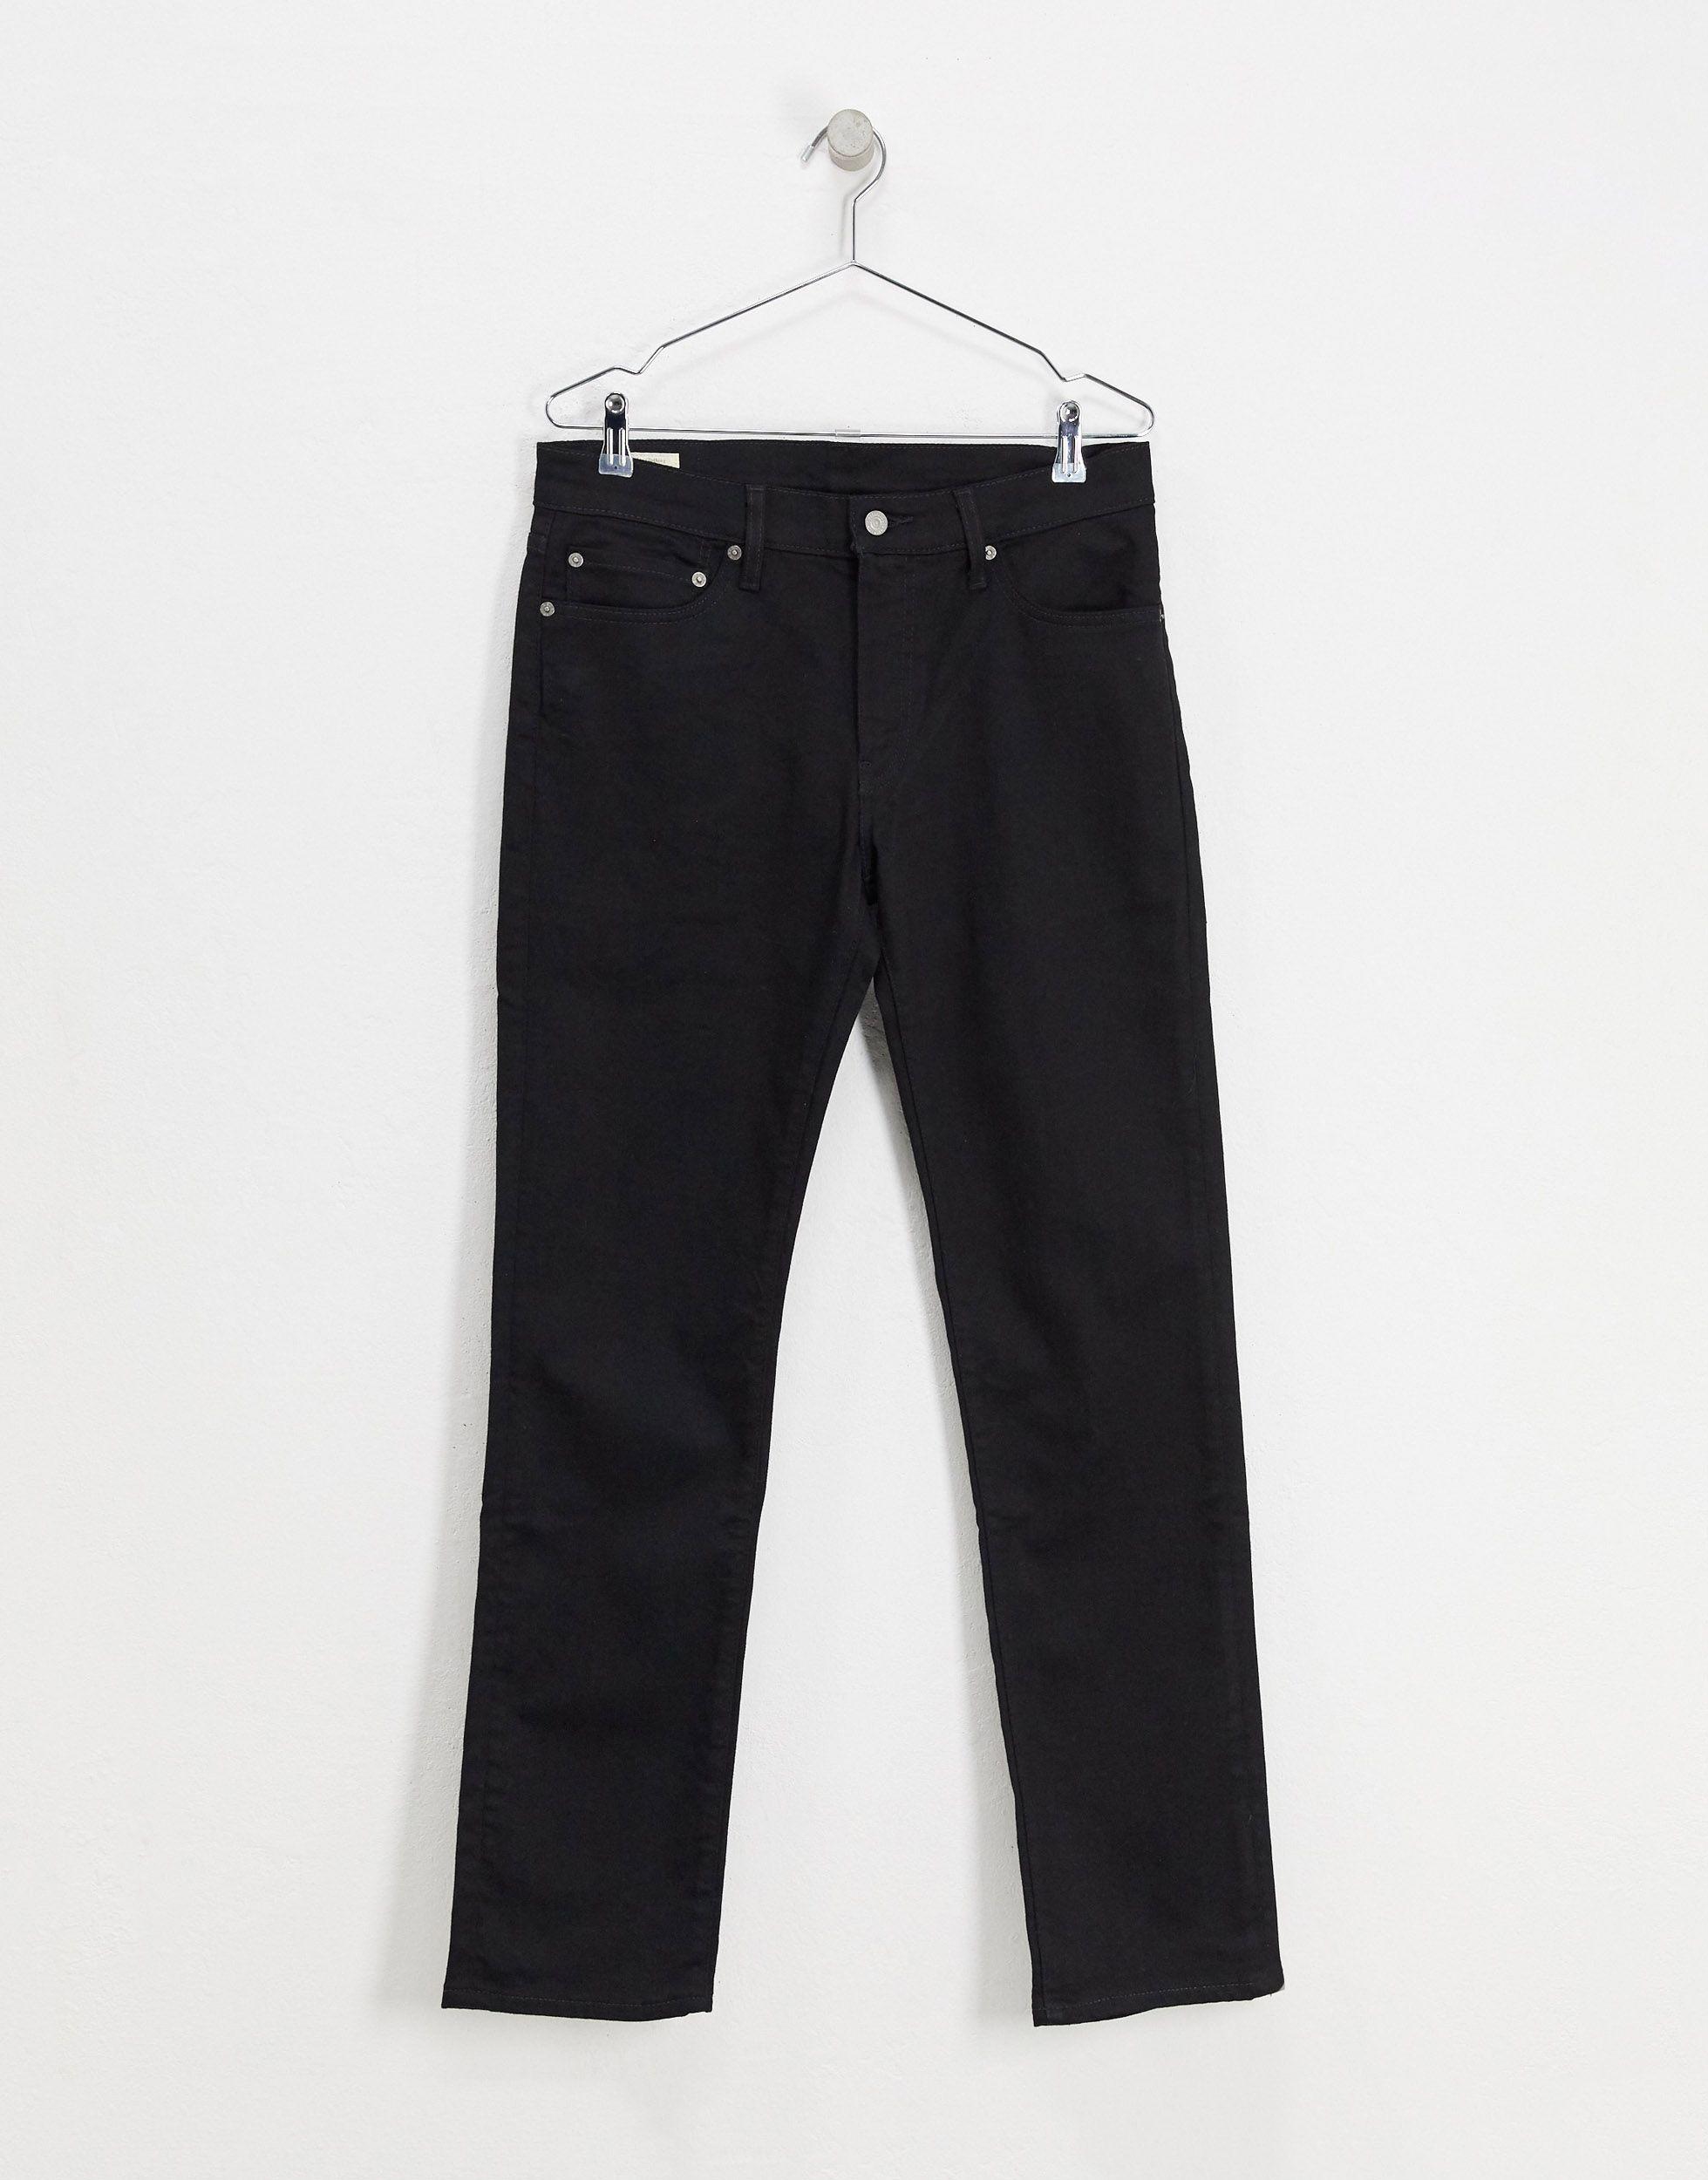 Levi's Denim 511 Slim Fit Jeans Nightshine Black Wash for Men - Lyst